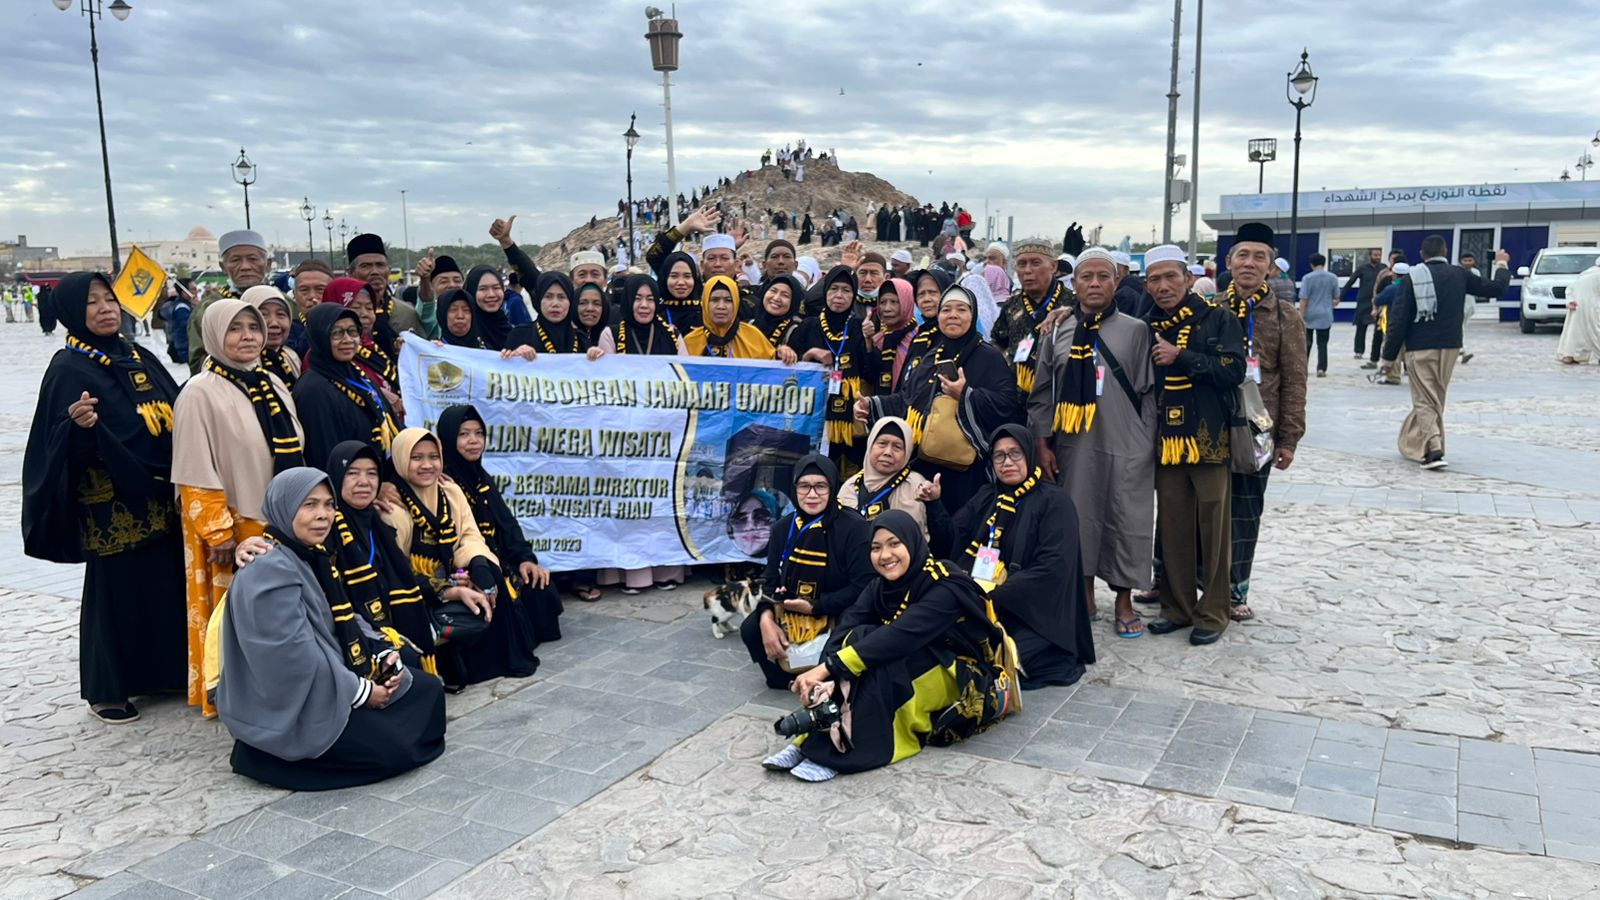 Umrah Bersama Brilian Mega Wisata, Jamaah Umrah Diajak Tour ke Kota Thoif